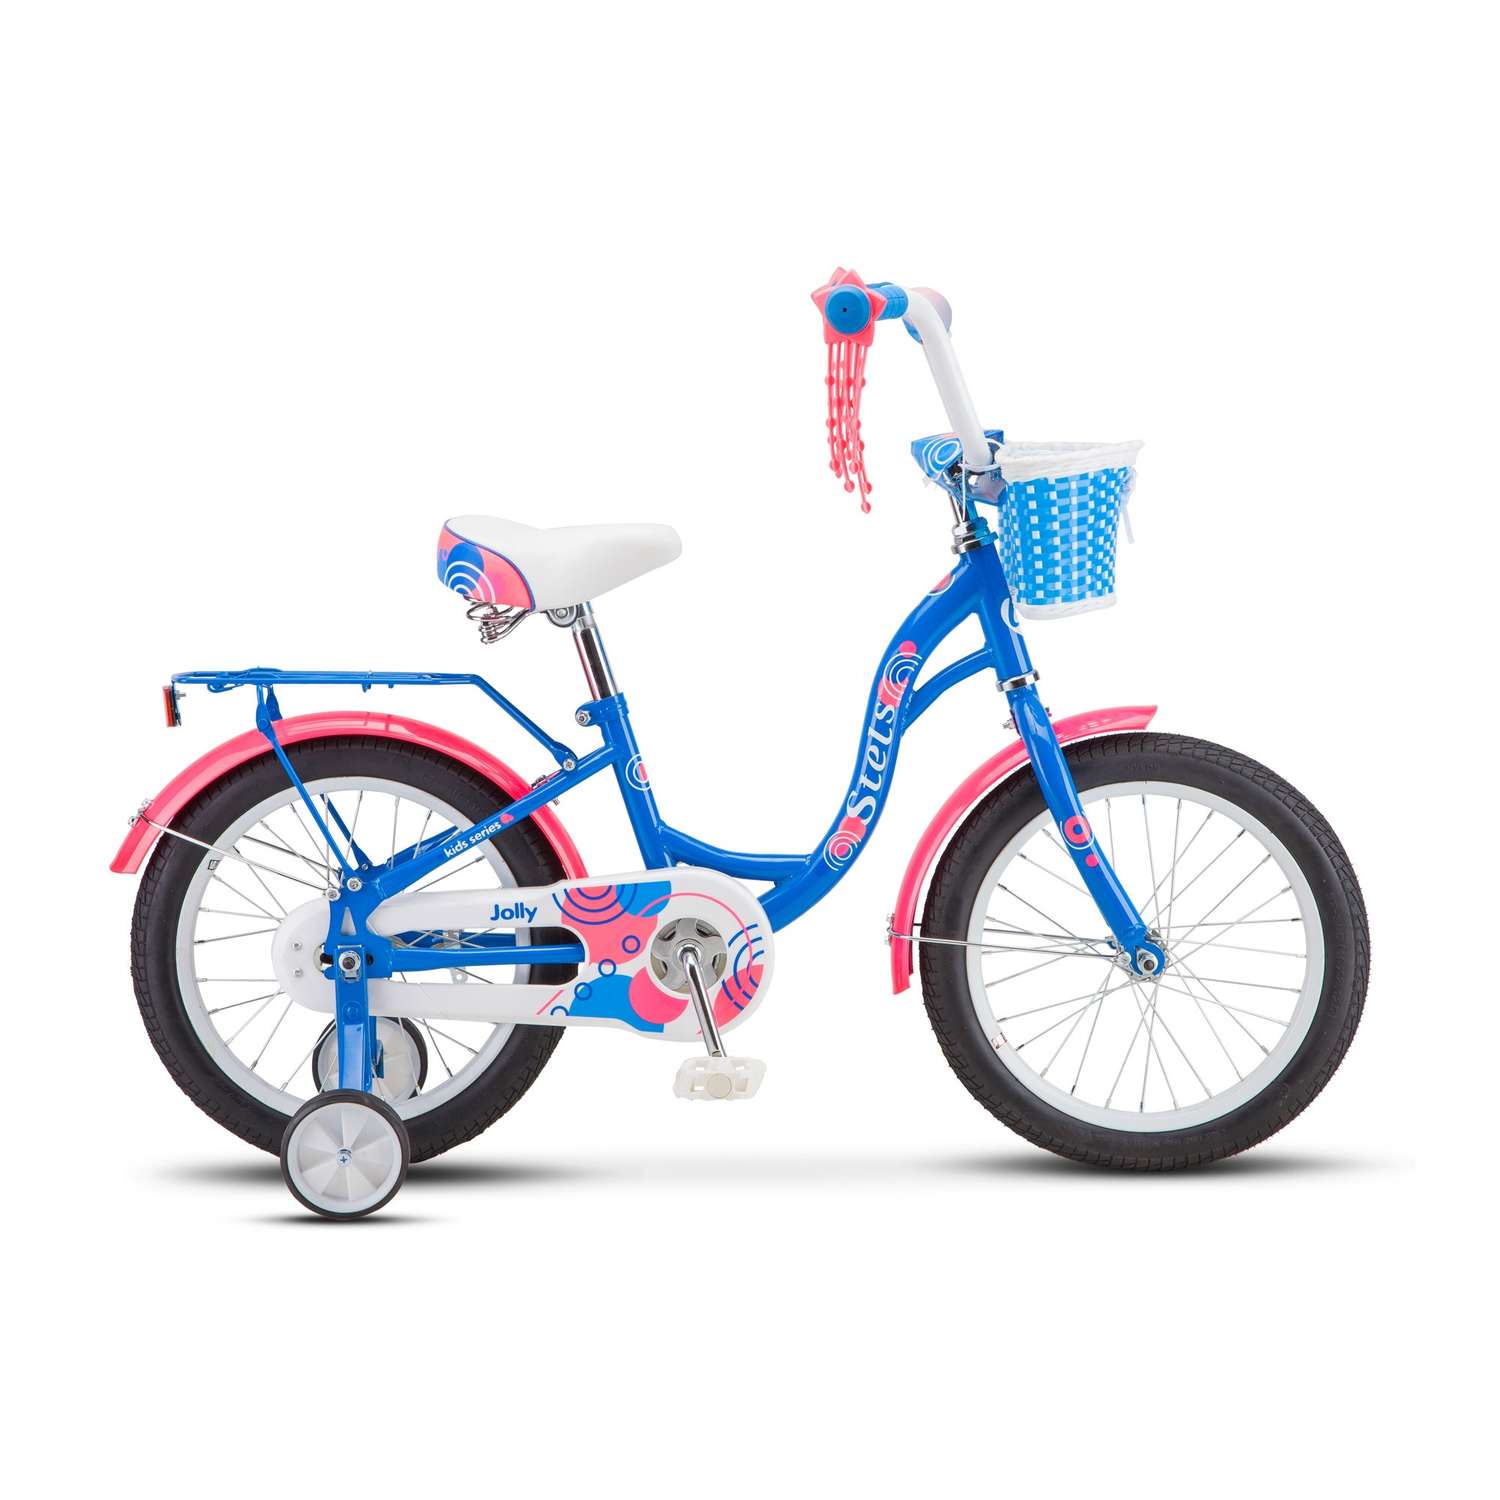 Детский велосипед STELS Jolly 16 (V010) синий - фото 1